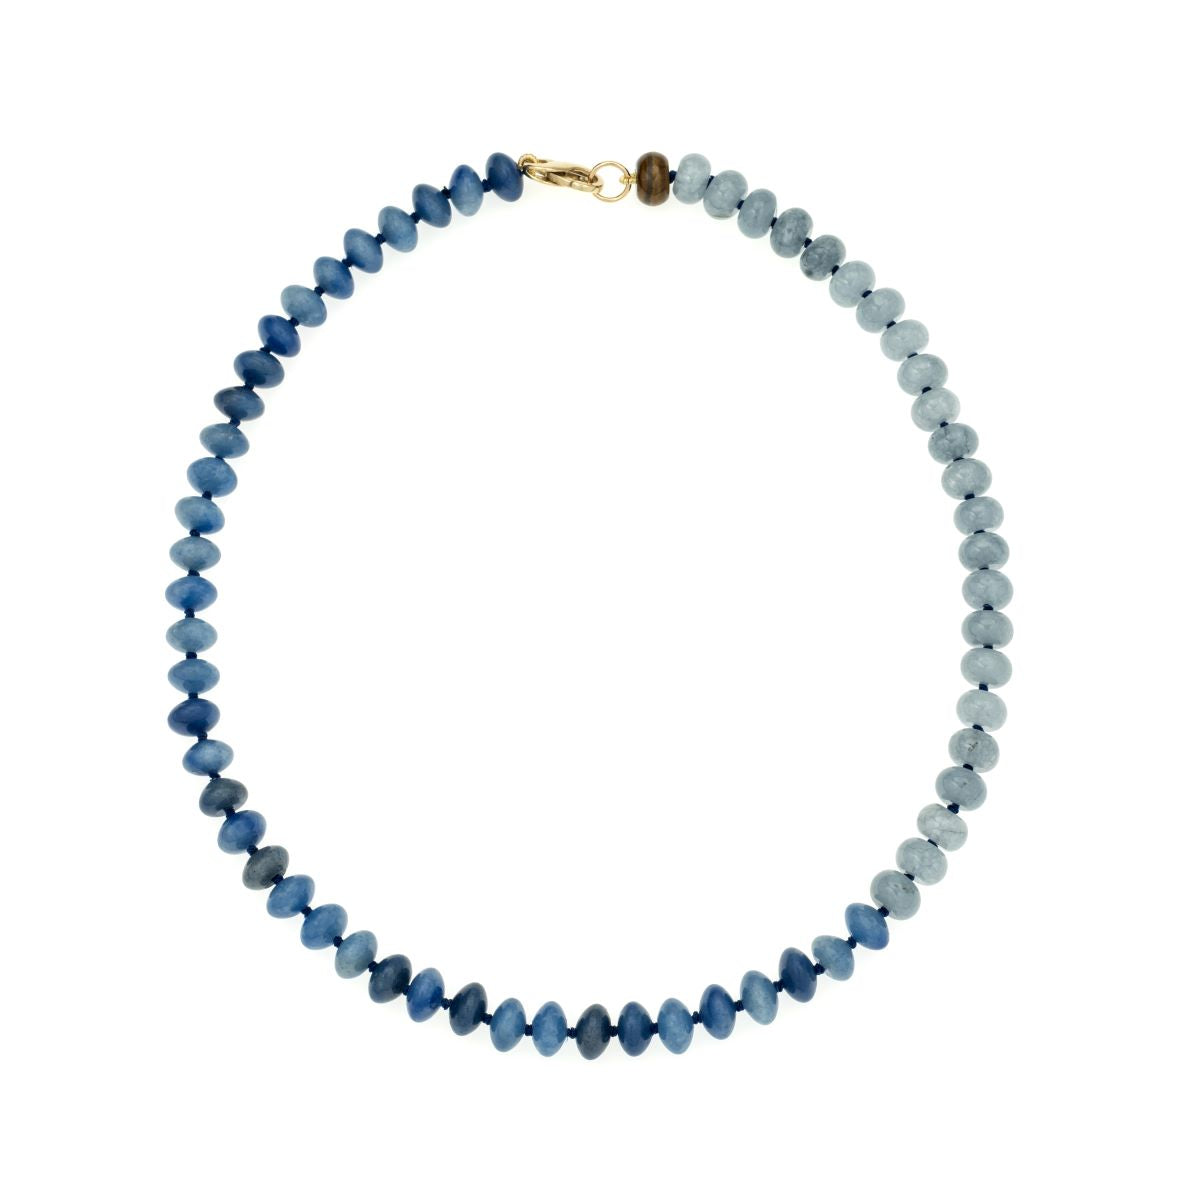 Shades of Deep Blue Gemstone Necklace